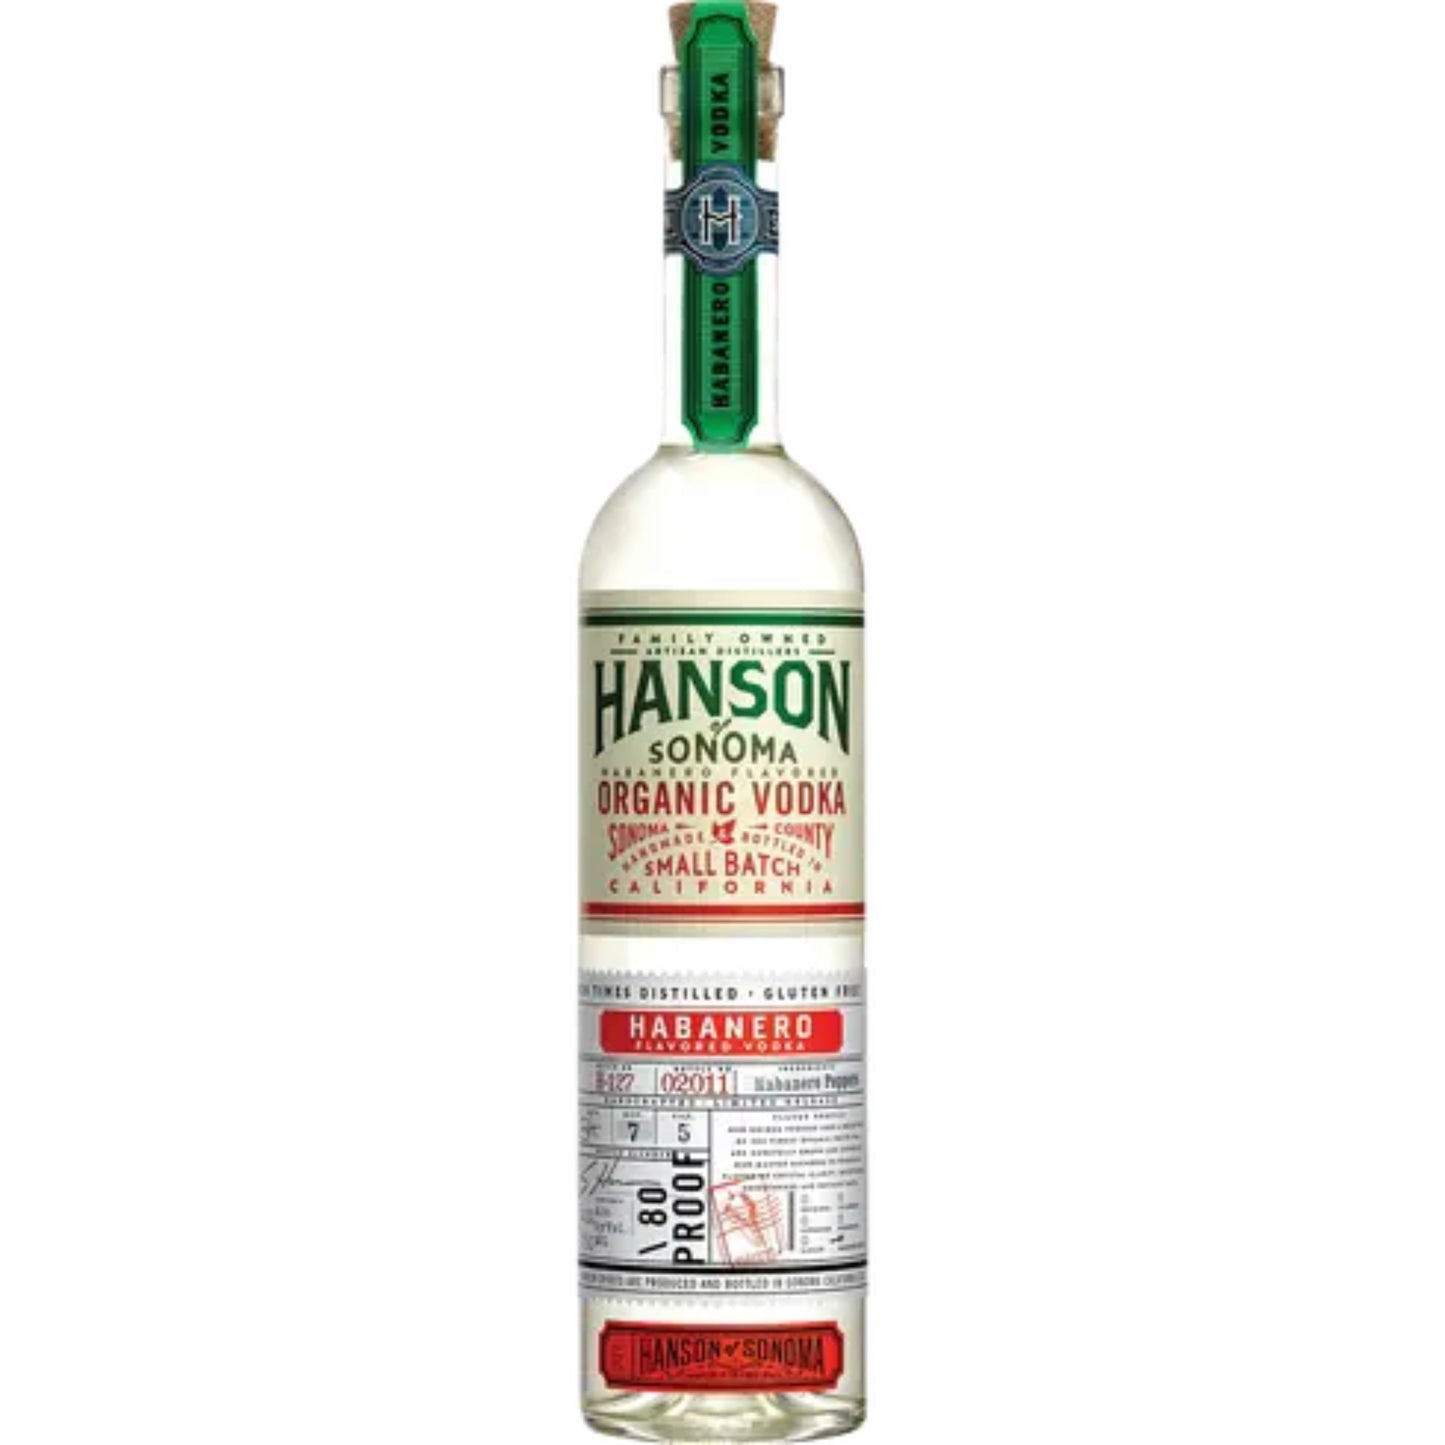 Hanson of Sonoma Habanero Organic Vodka